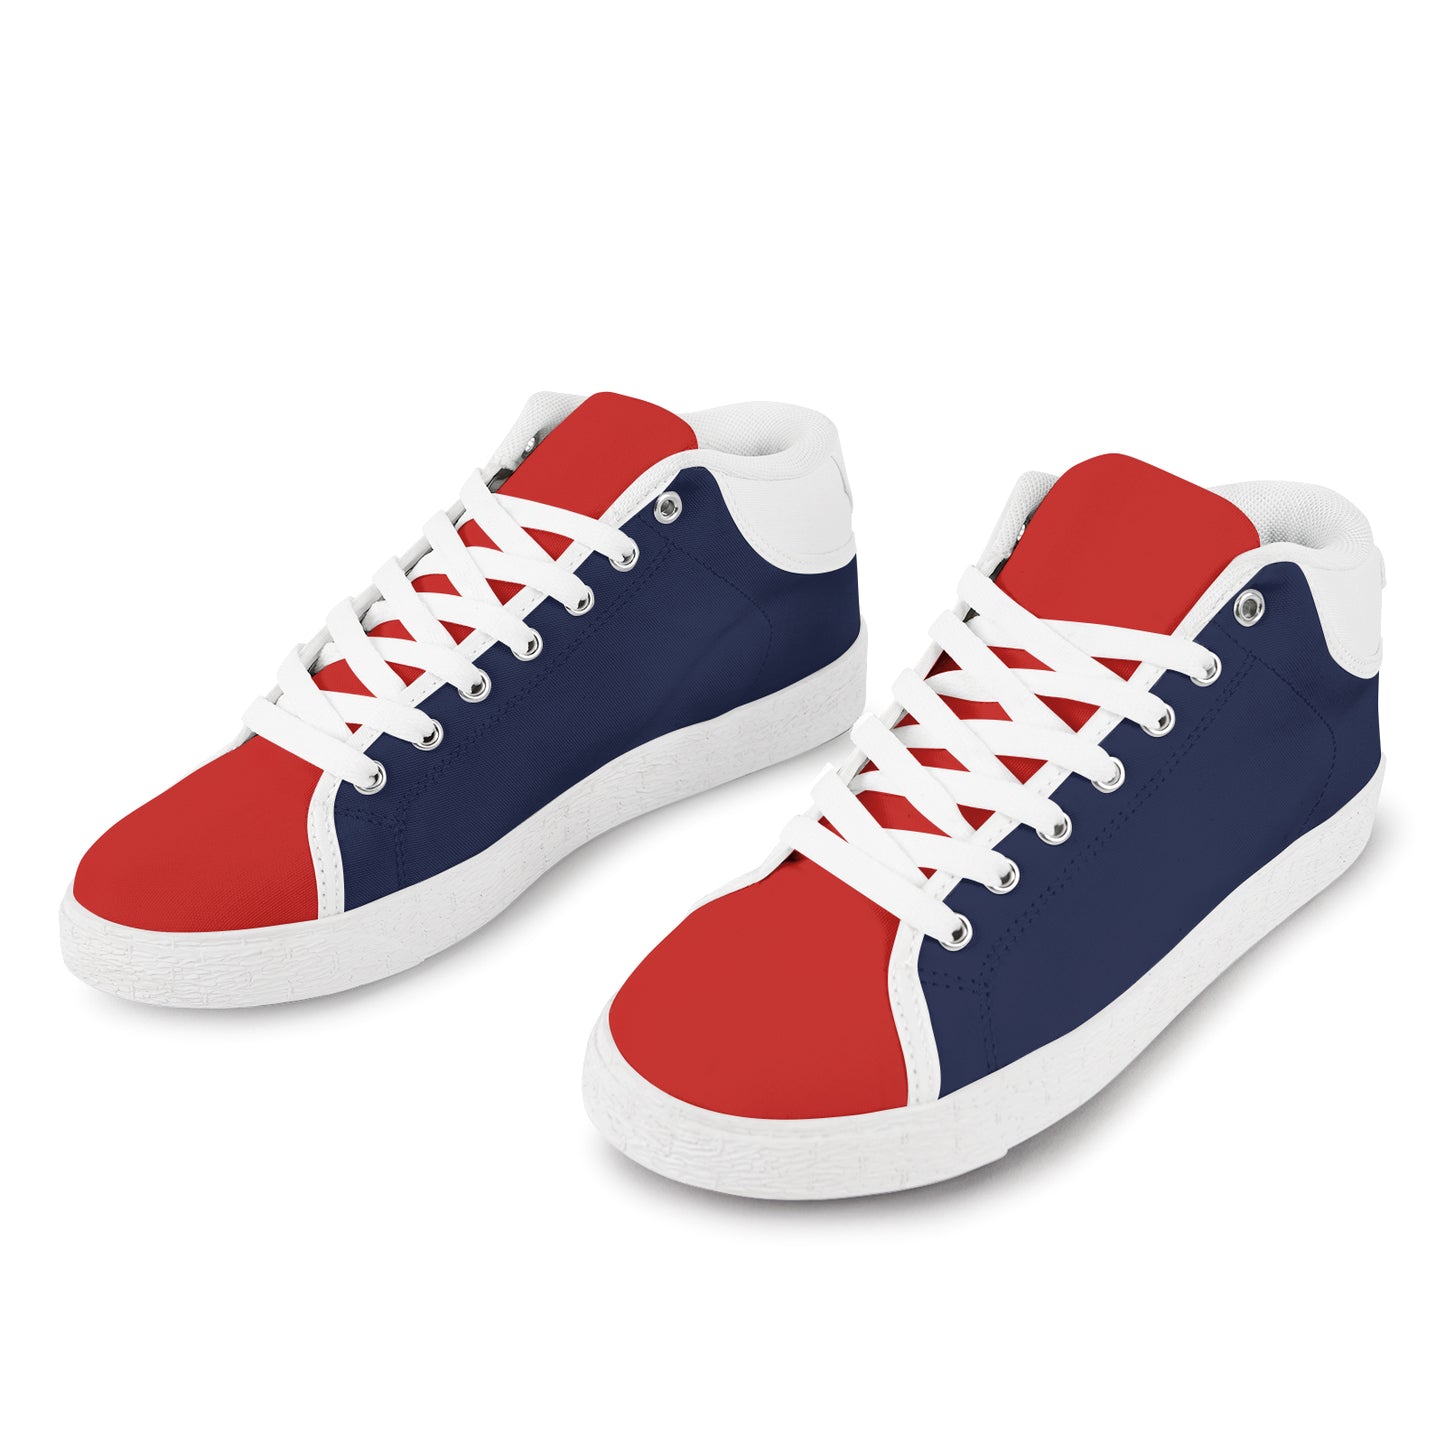 Chukka Canvas Women's Shoes - Red/Navy Combo